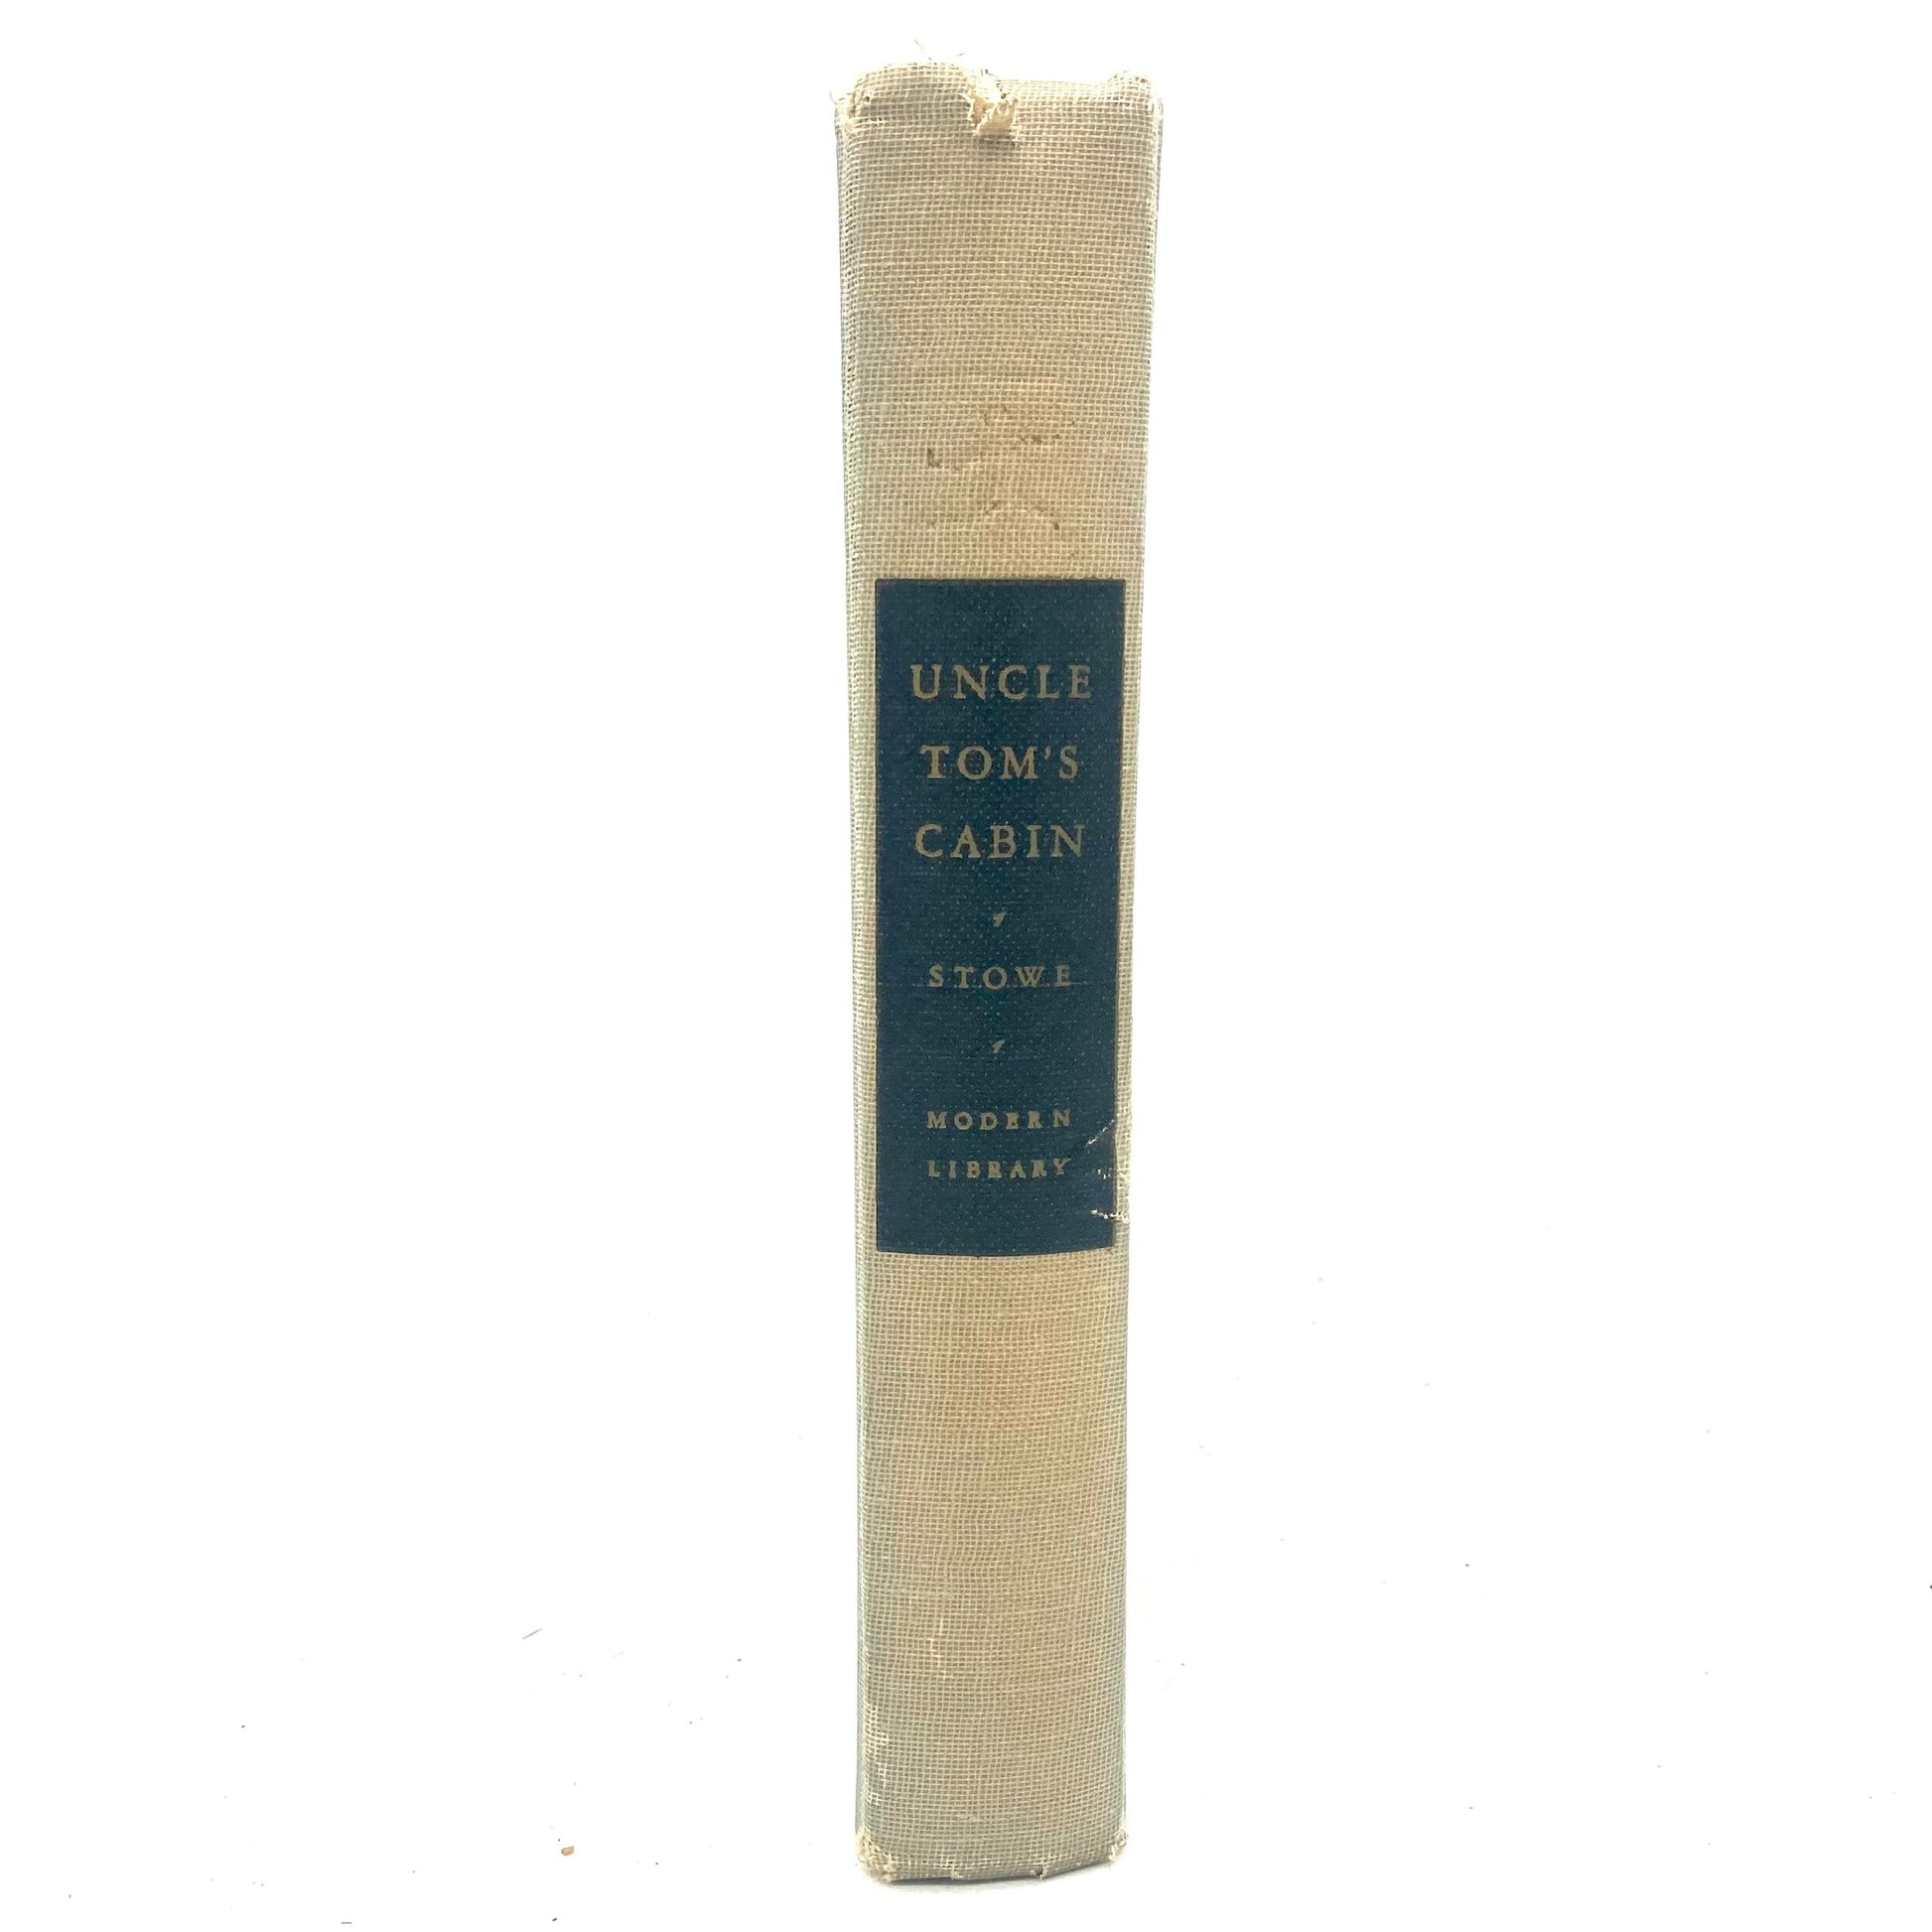 STOWE, Harriet Beecher "Uncle Tom's Cabin" [Modern Library, 1938] - Buzz Bookstore